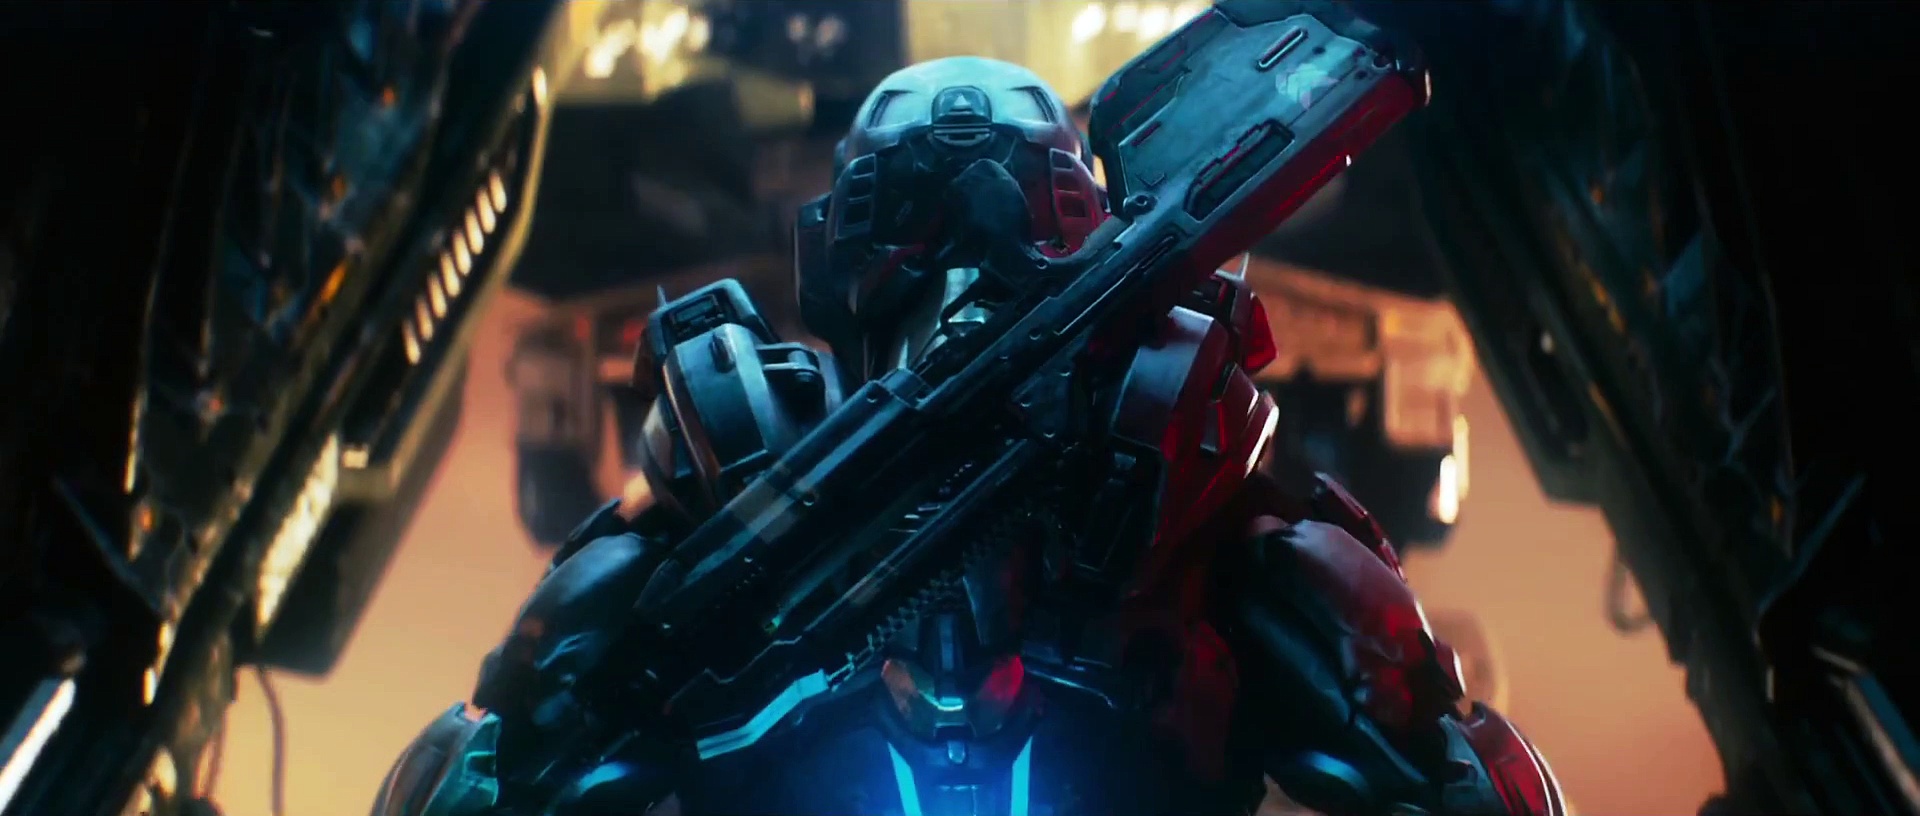 Halo 5 Guardians : Spartan Locke Armor set - Download Dailymotion Videos.